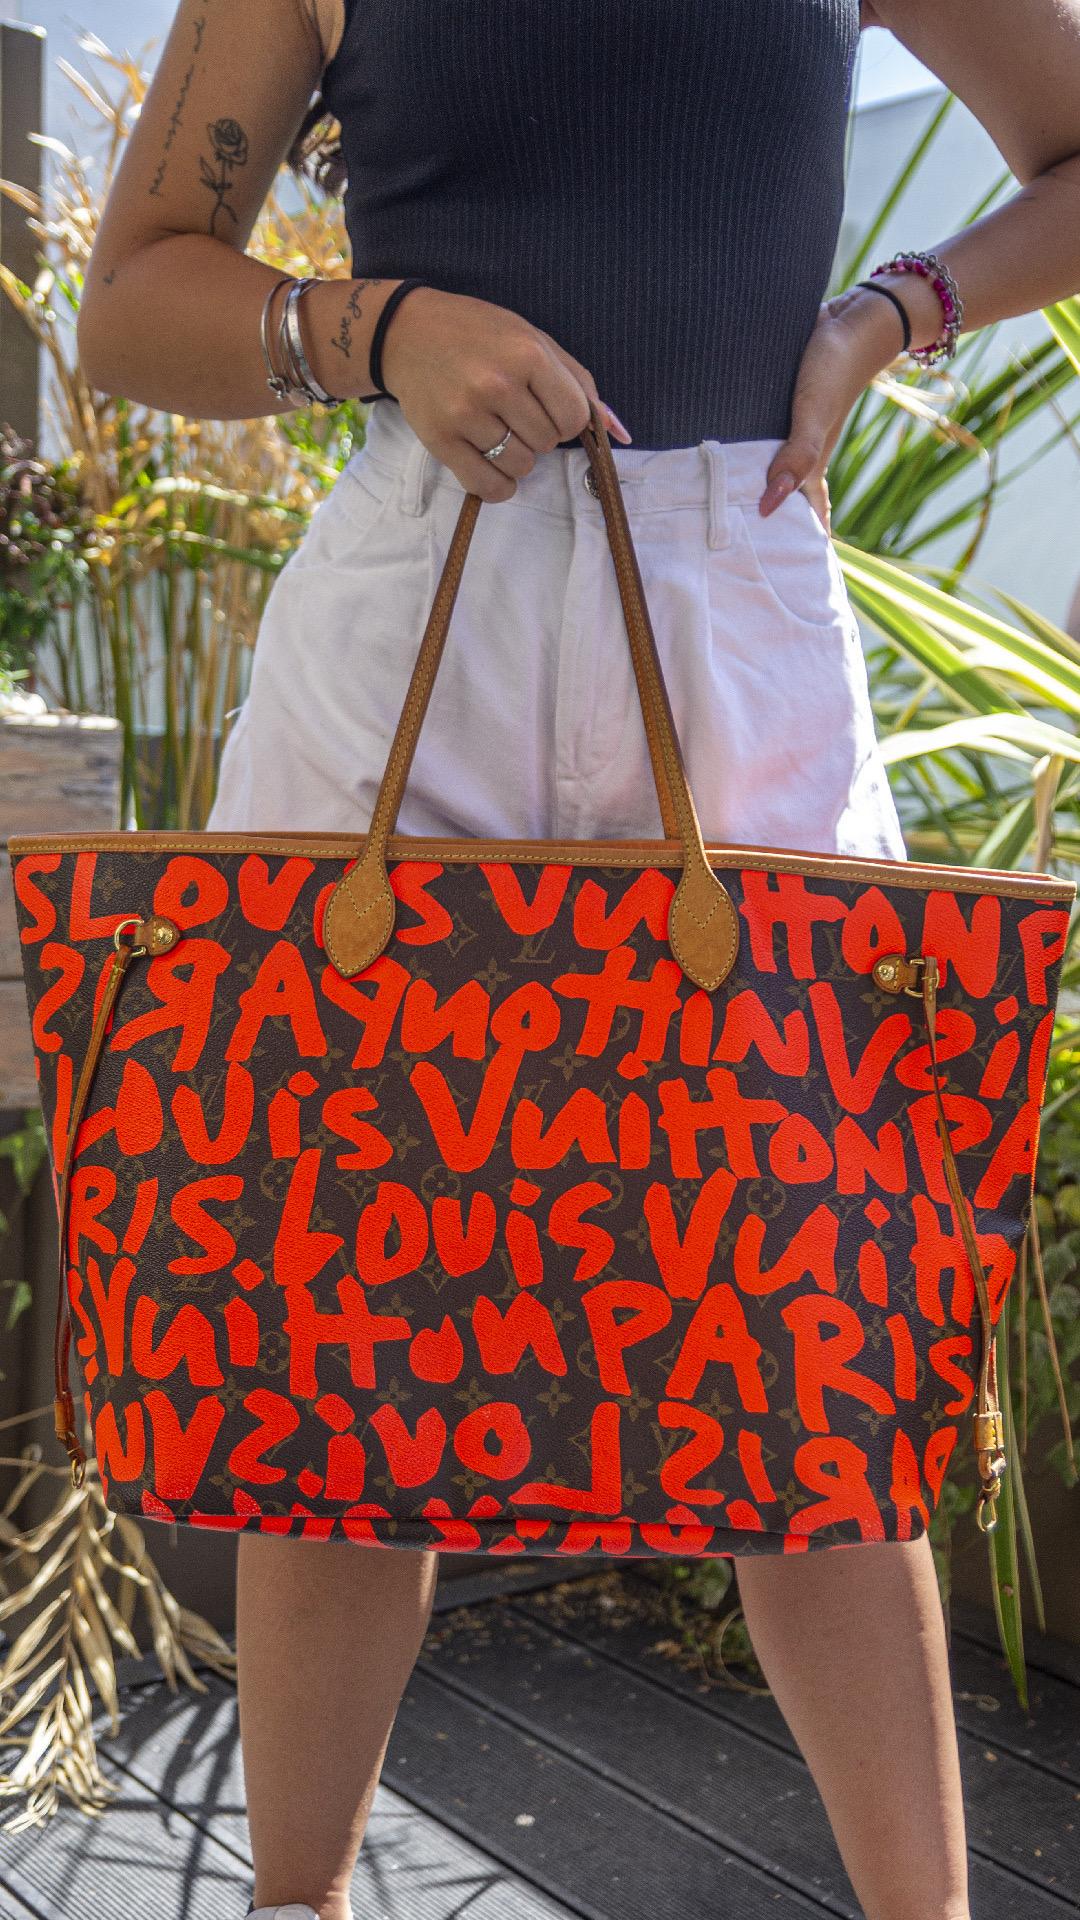 Louis Vuitton Neverfull Graffiti - 3 For Sale on 1stDibs